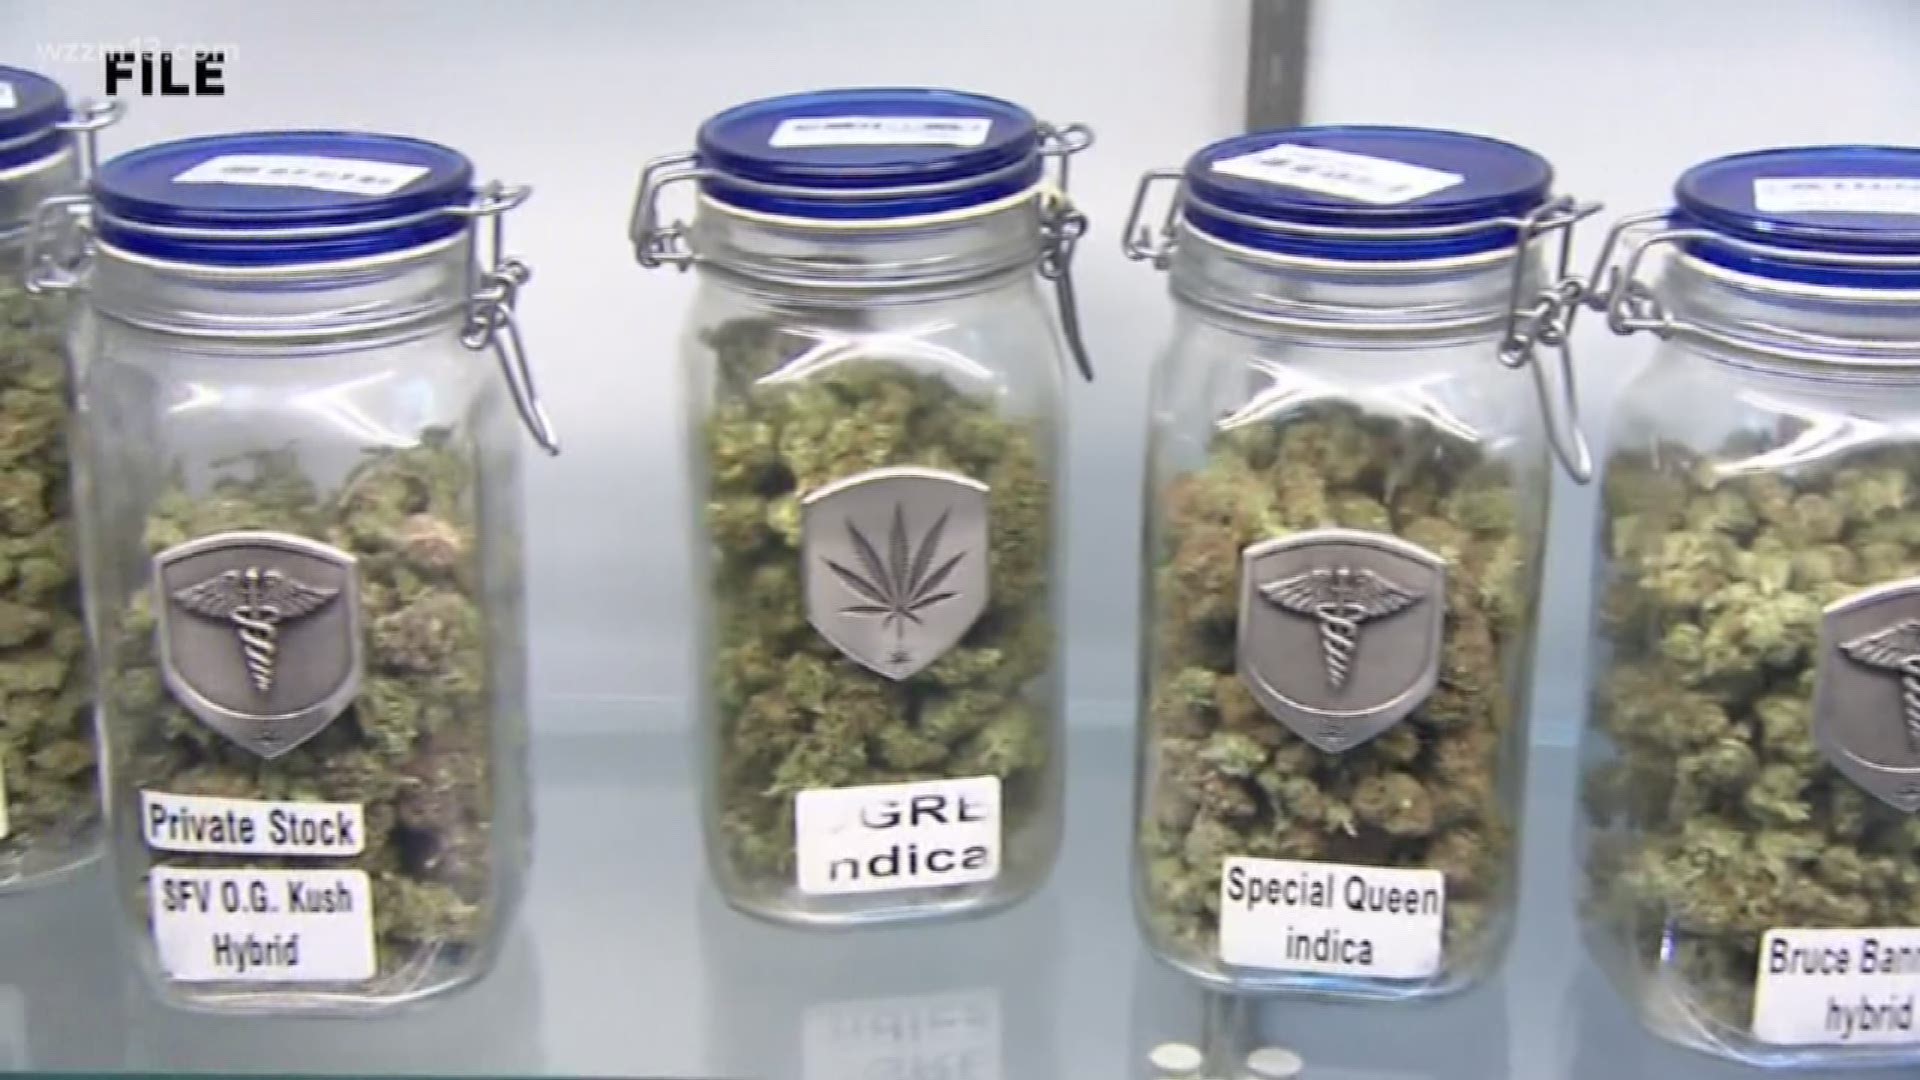 Marijuana products recalled in Michigan